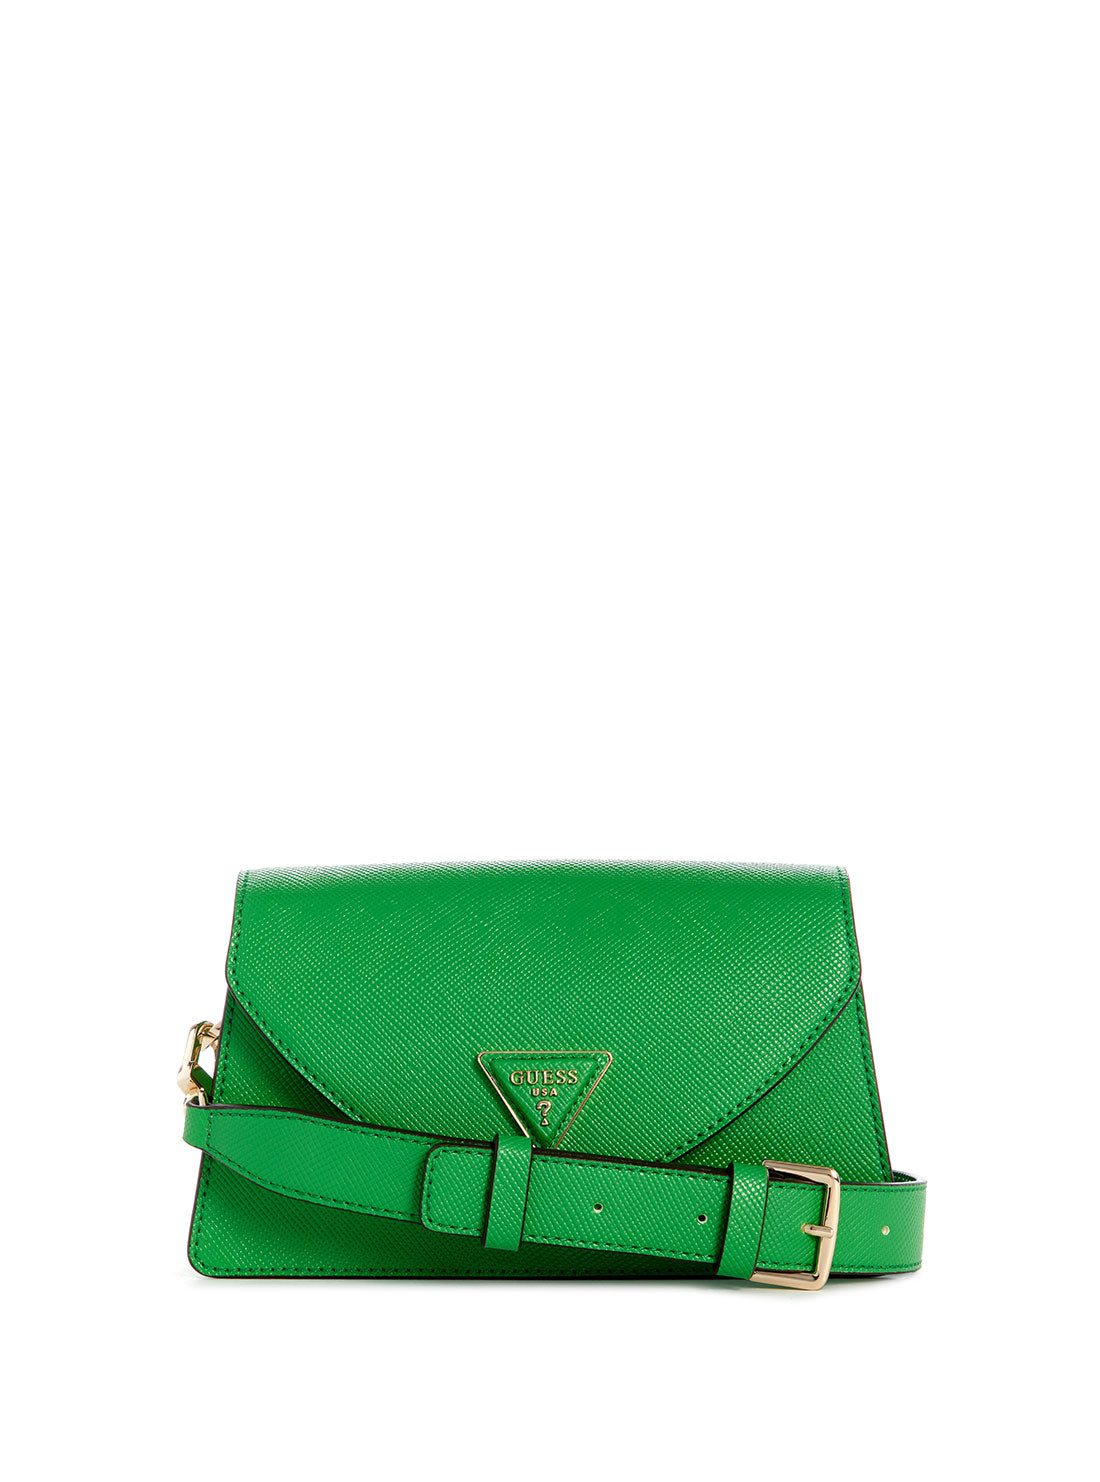 GUESS Green Avis Mini Shoulder Bag front view